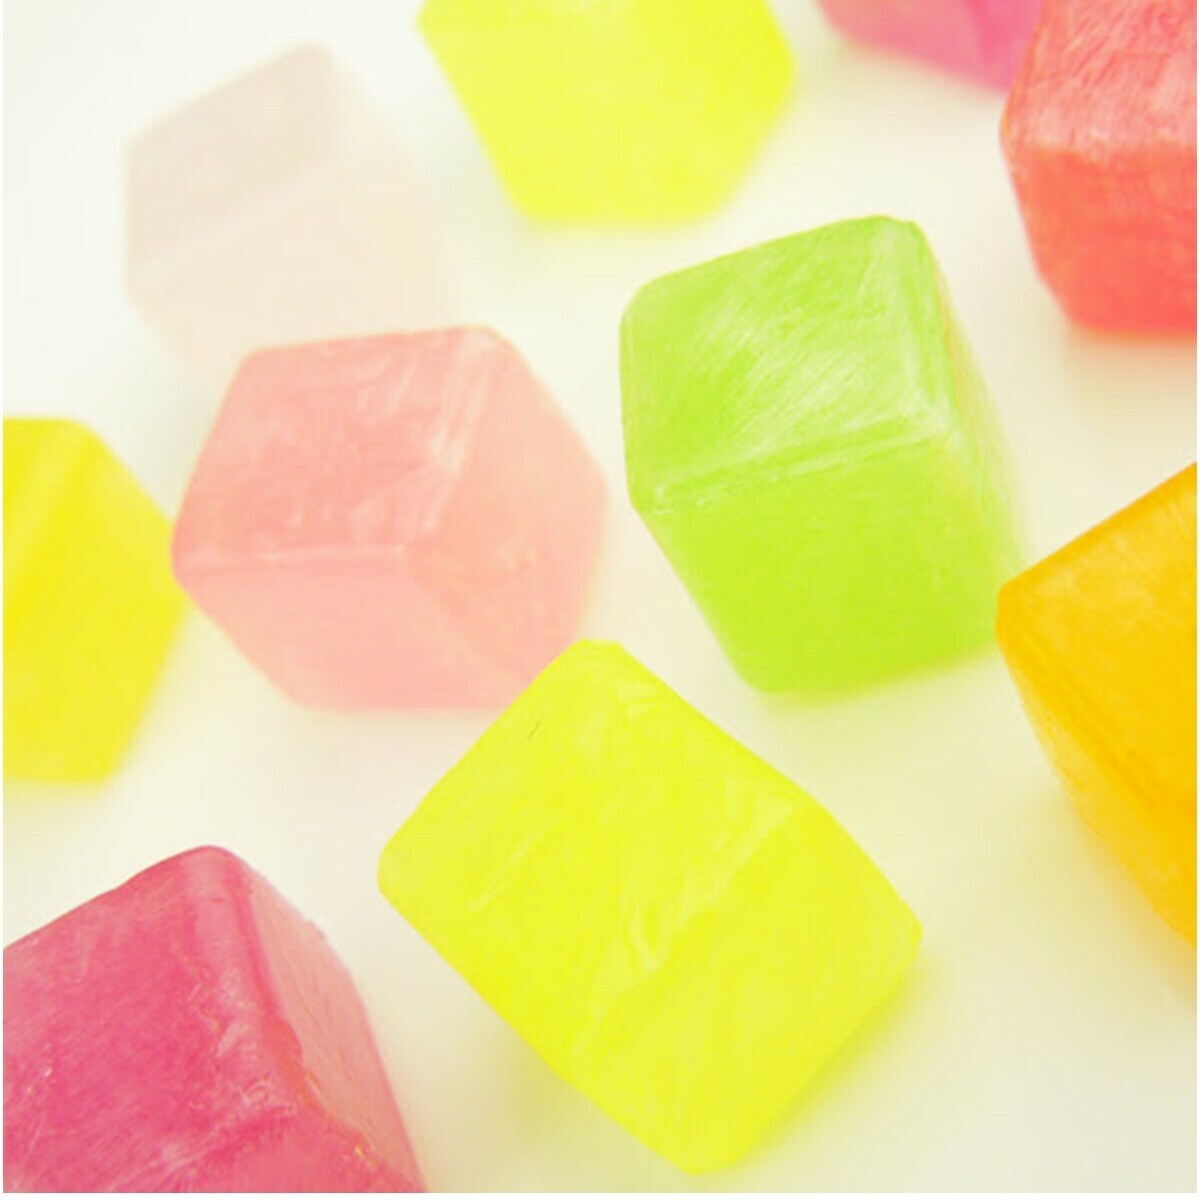 Cuby Rop Hard Candy - 7 Fruit Mix – napaJapan